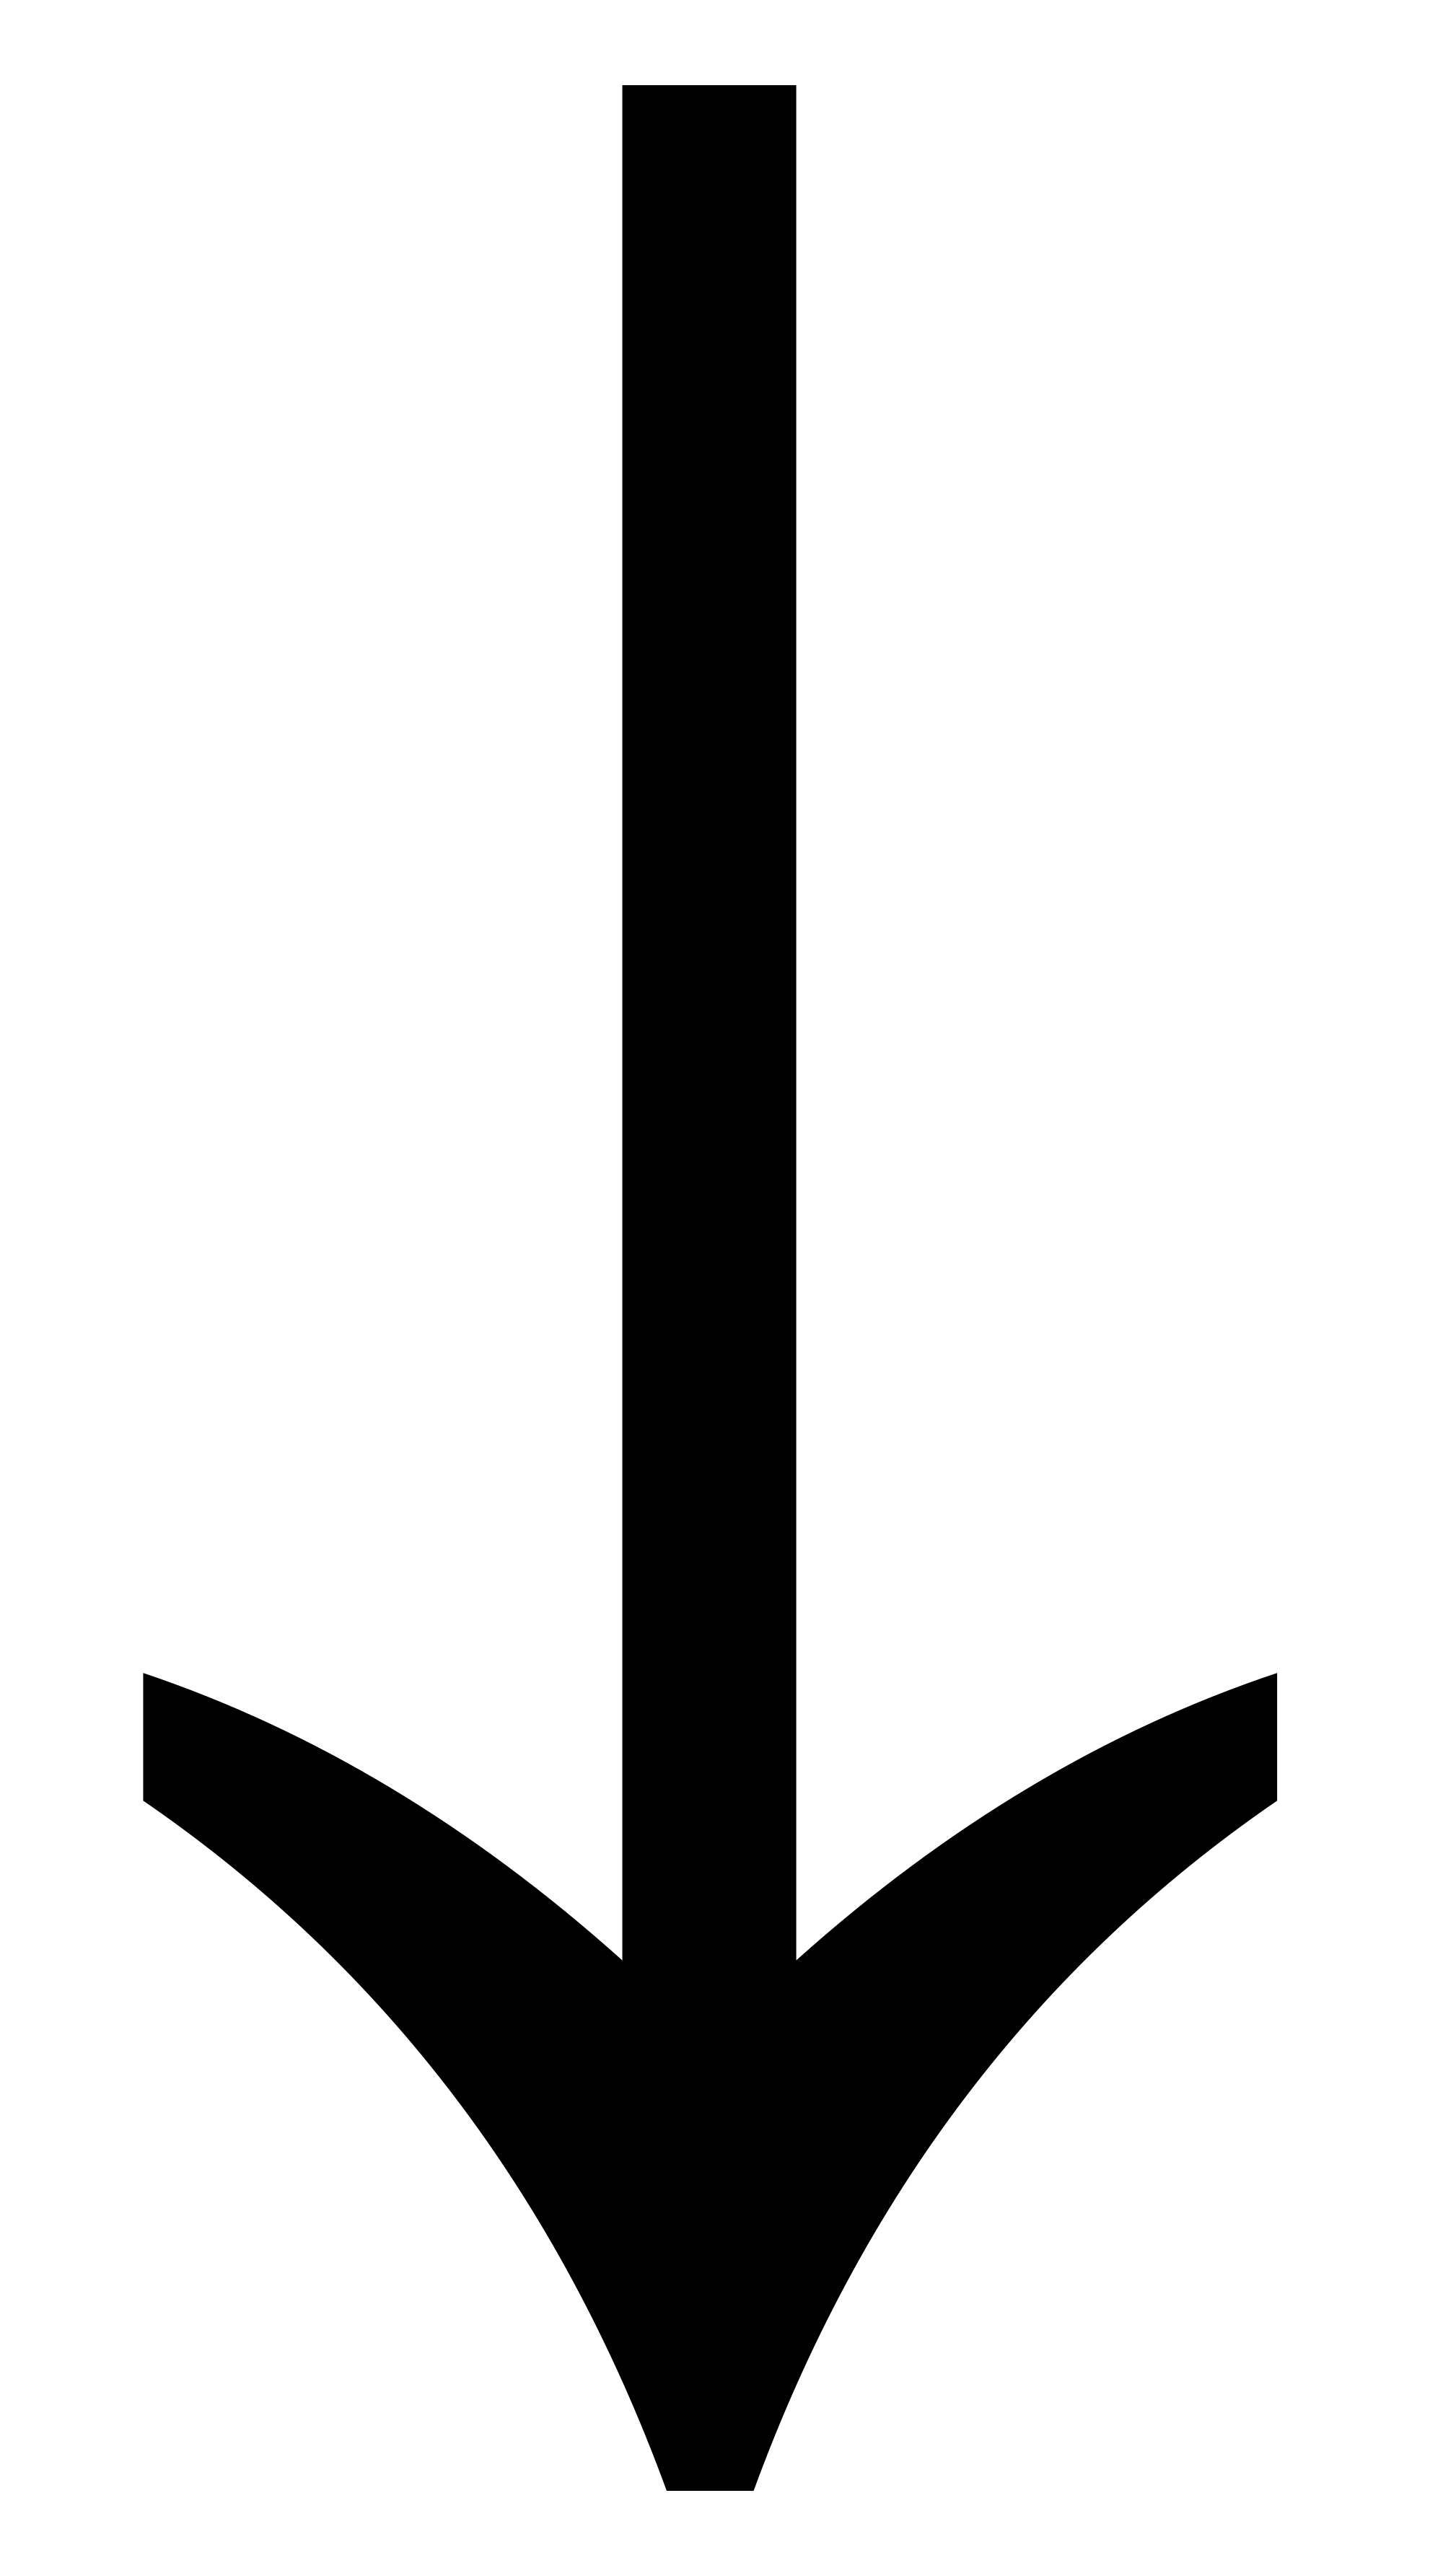 U Shape in a Black Arrow Logo - File:U+2193.svg - Wikimedia Commons